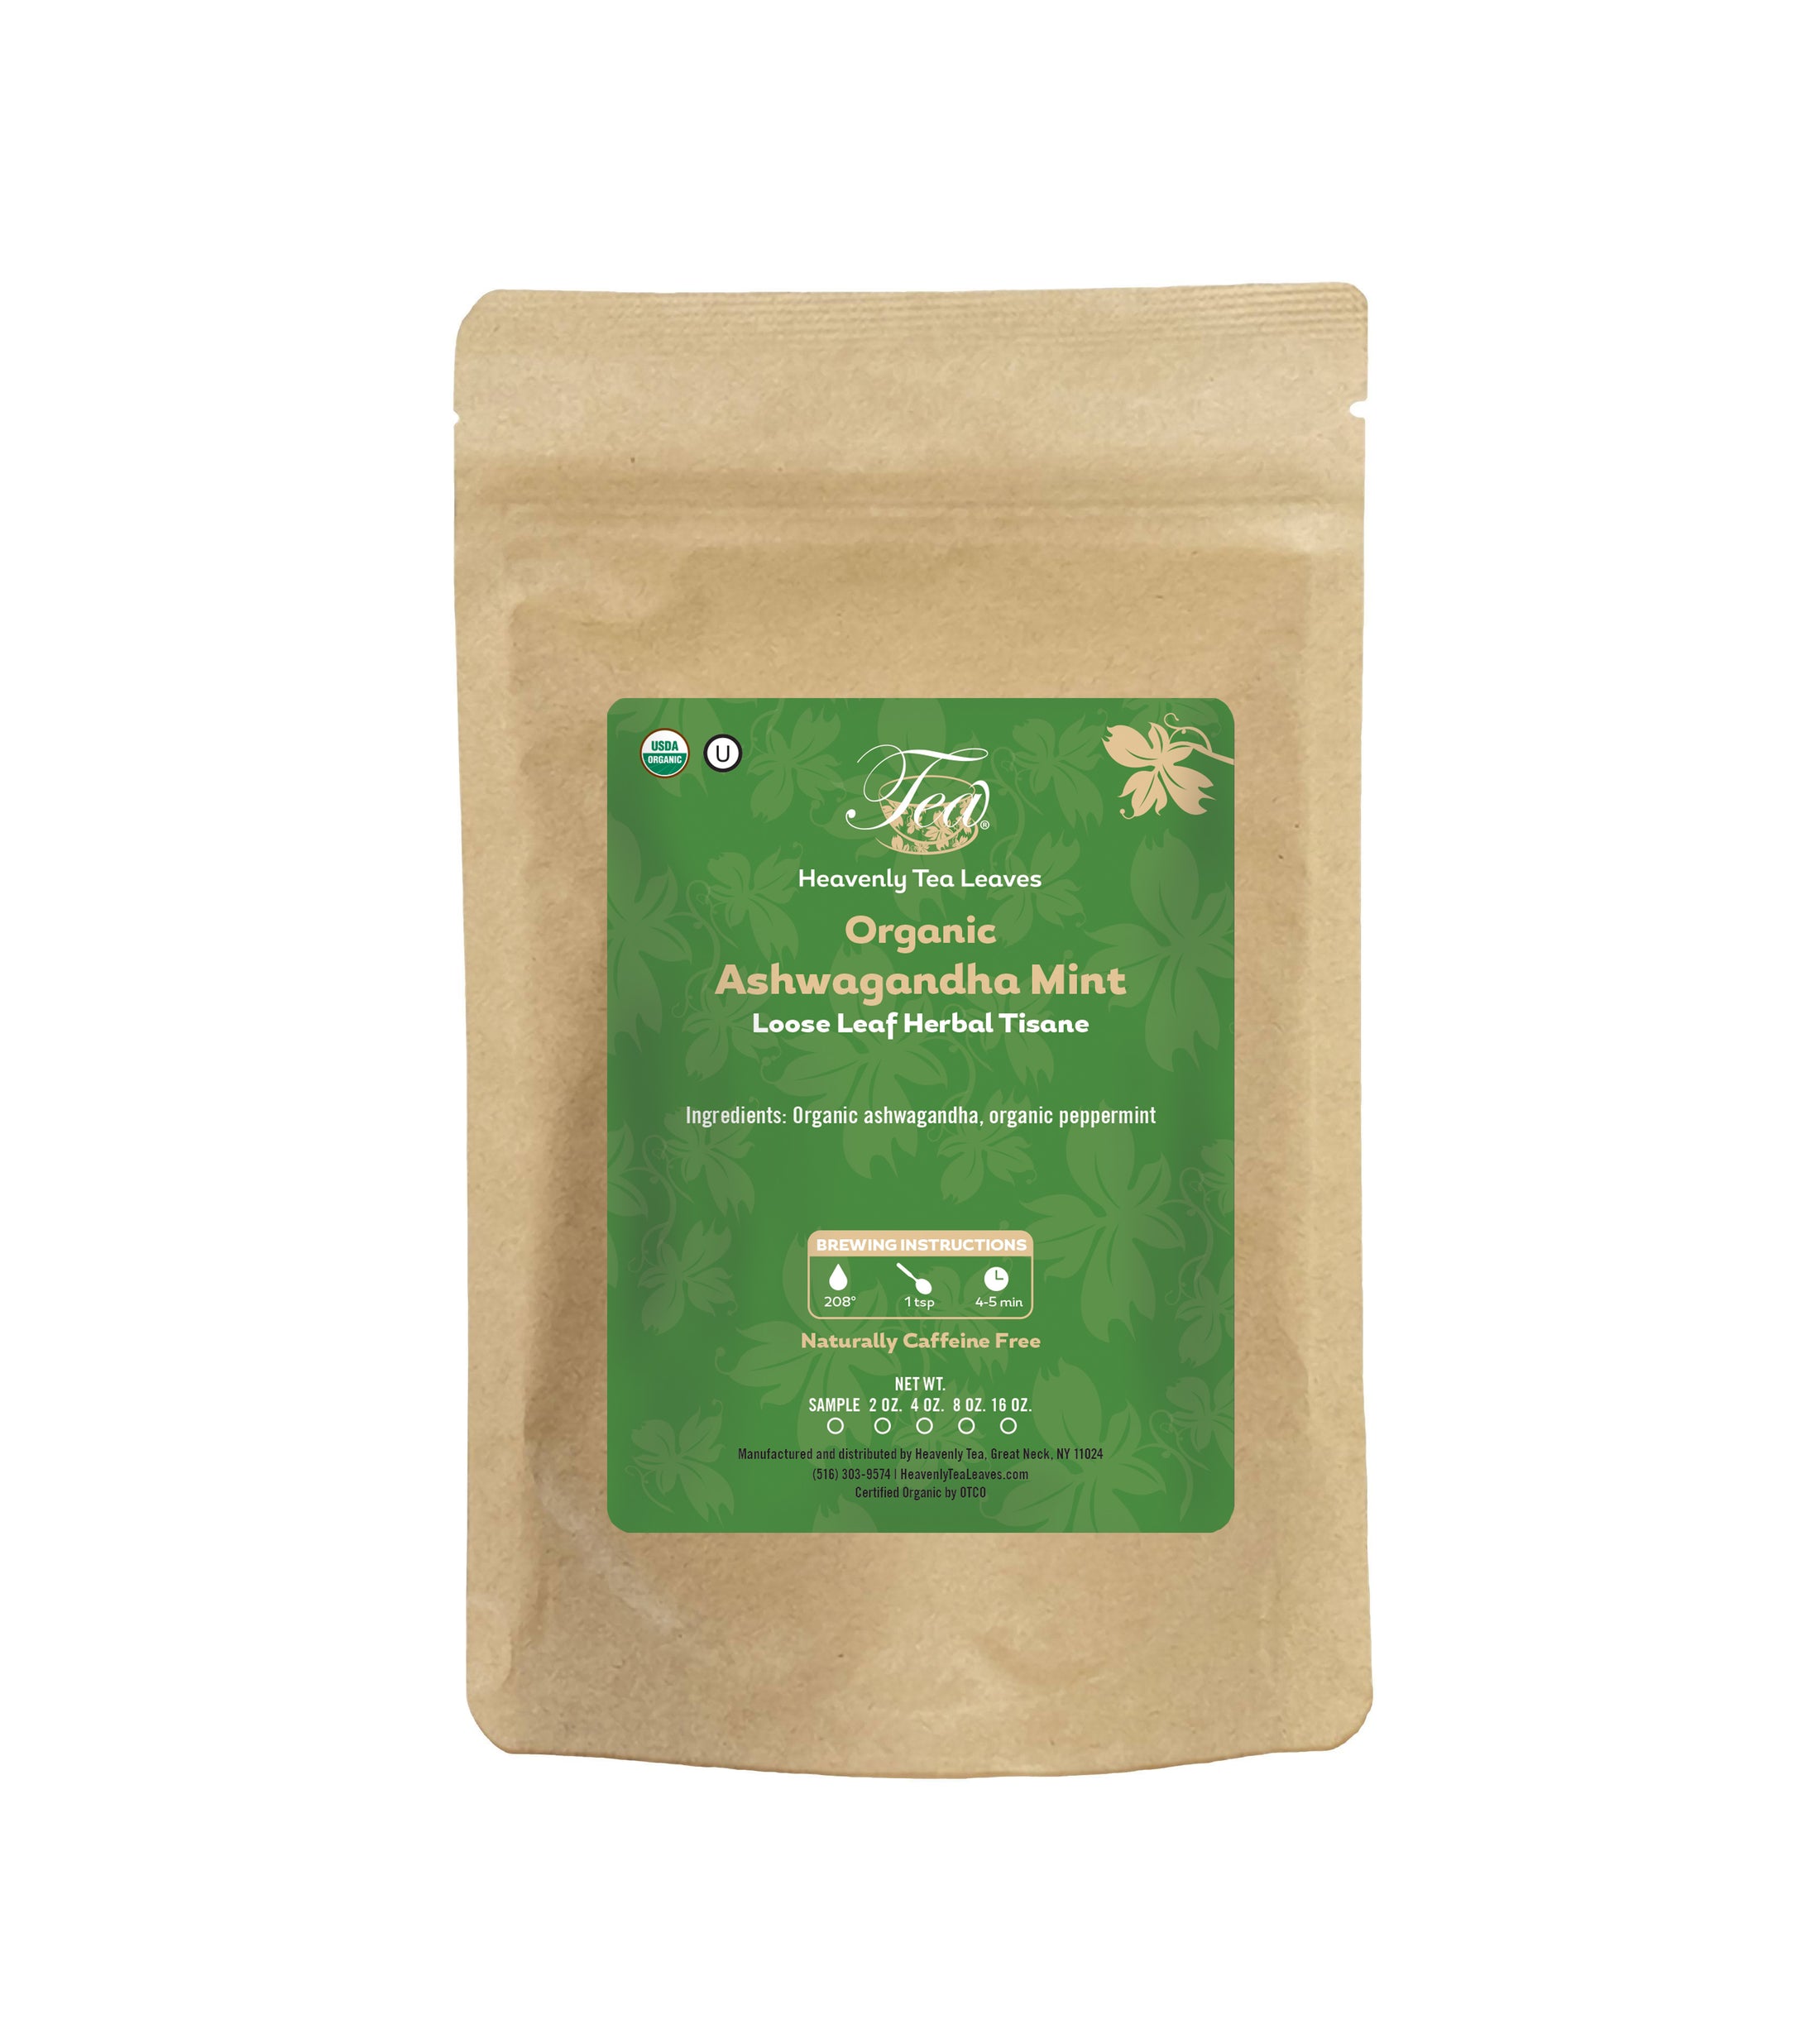 Organic Ashwagandha Mint - Loose Leaf Herbal Tea | Heavenly Tea Leaves